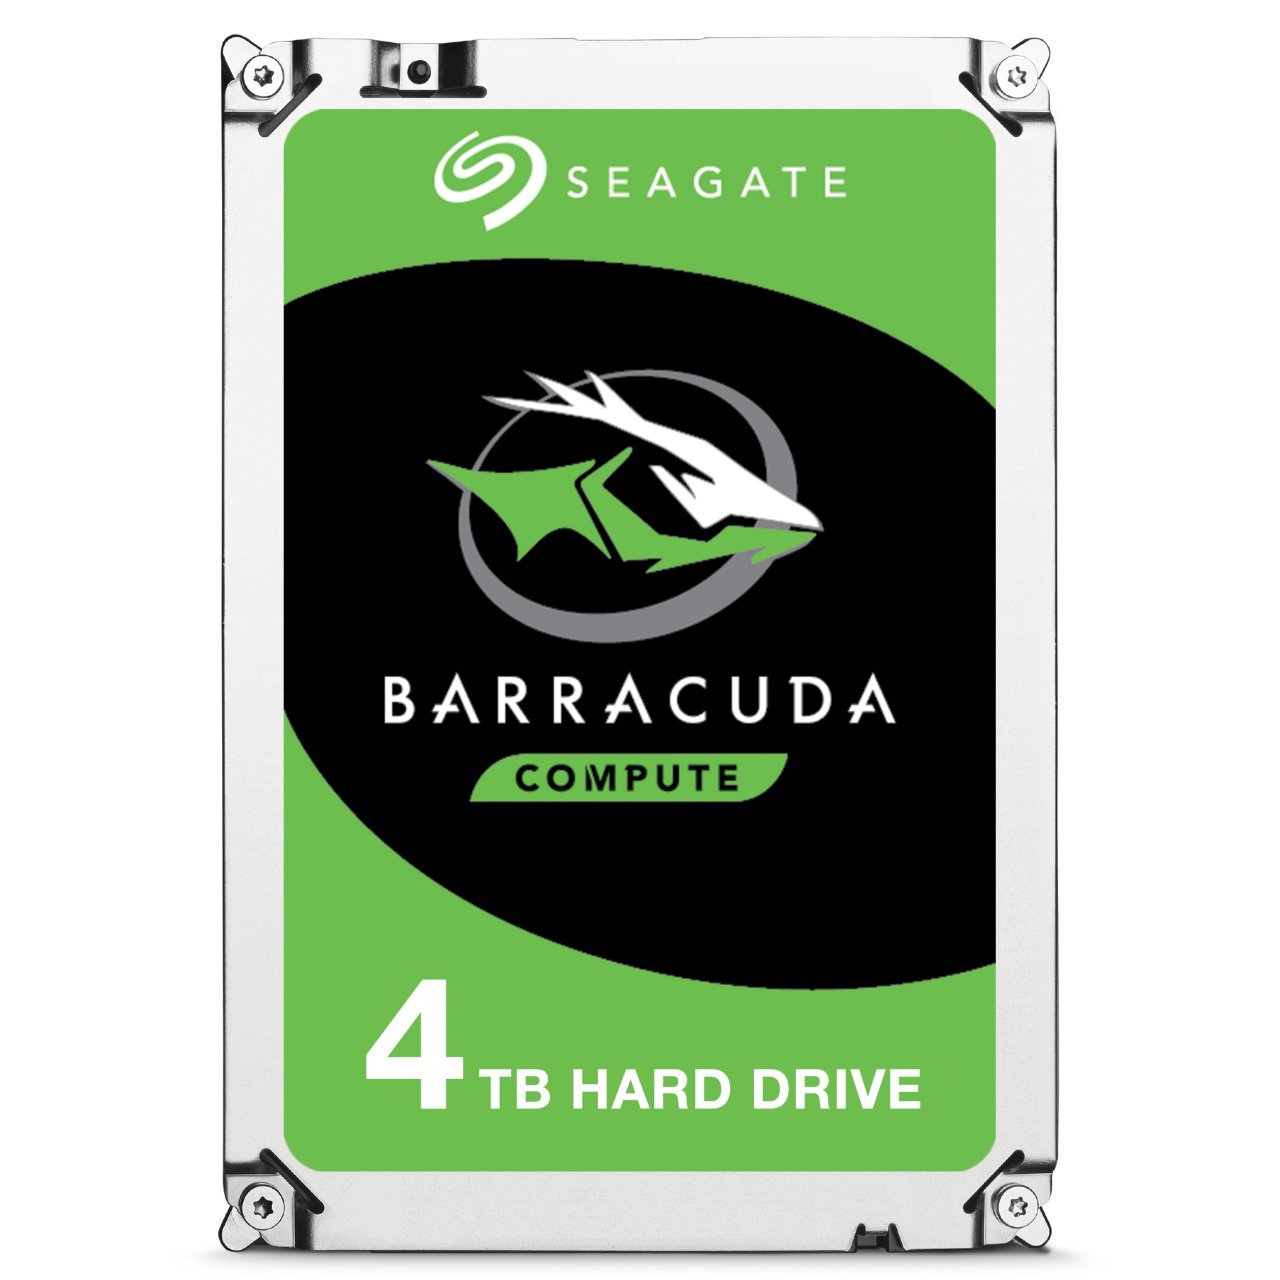 Seagate Barracuda ST4000DM004 4 TB 256 MB Cache SATA 6.0Gb/s 3.5'' HardDisk